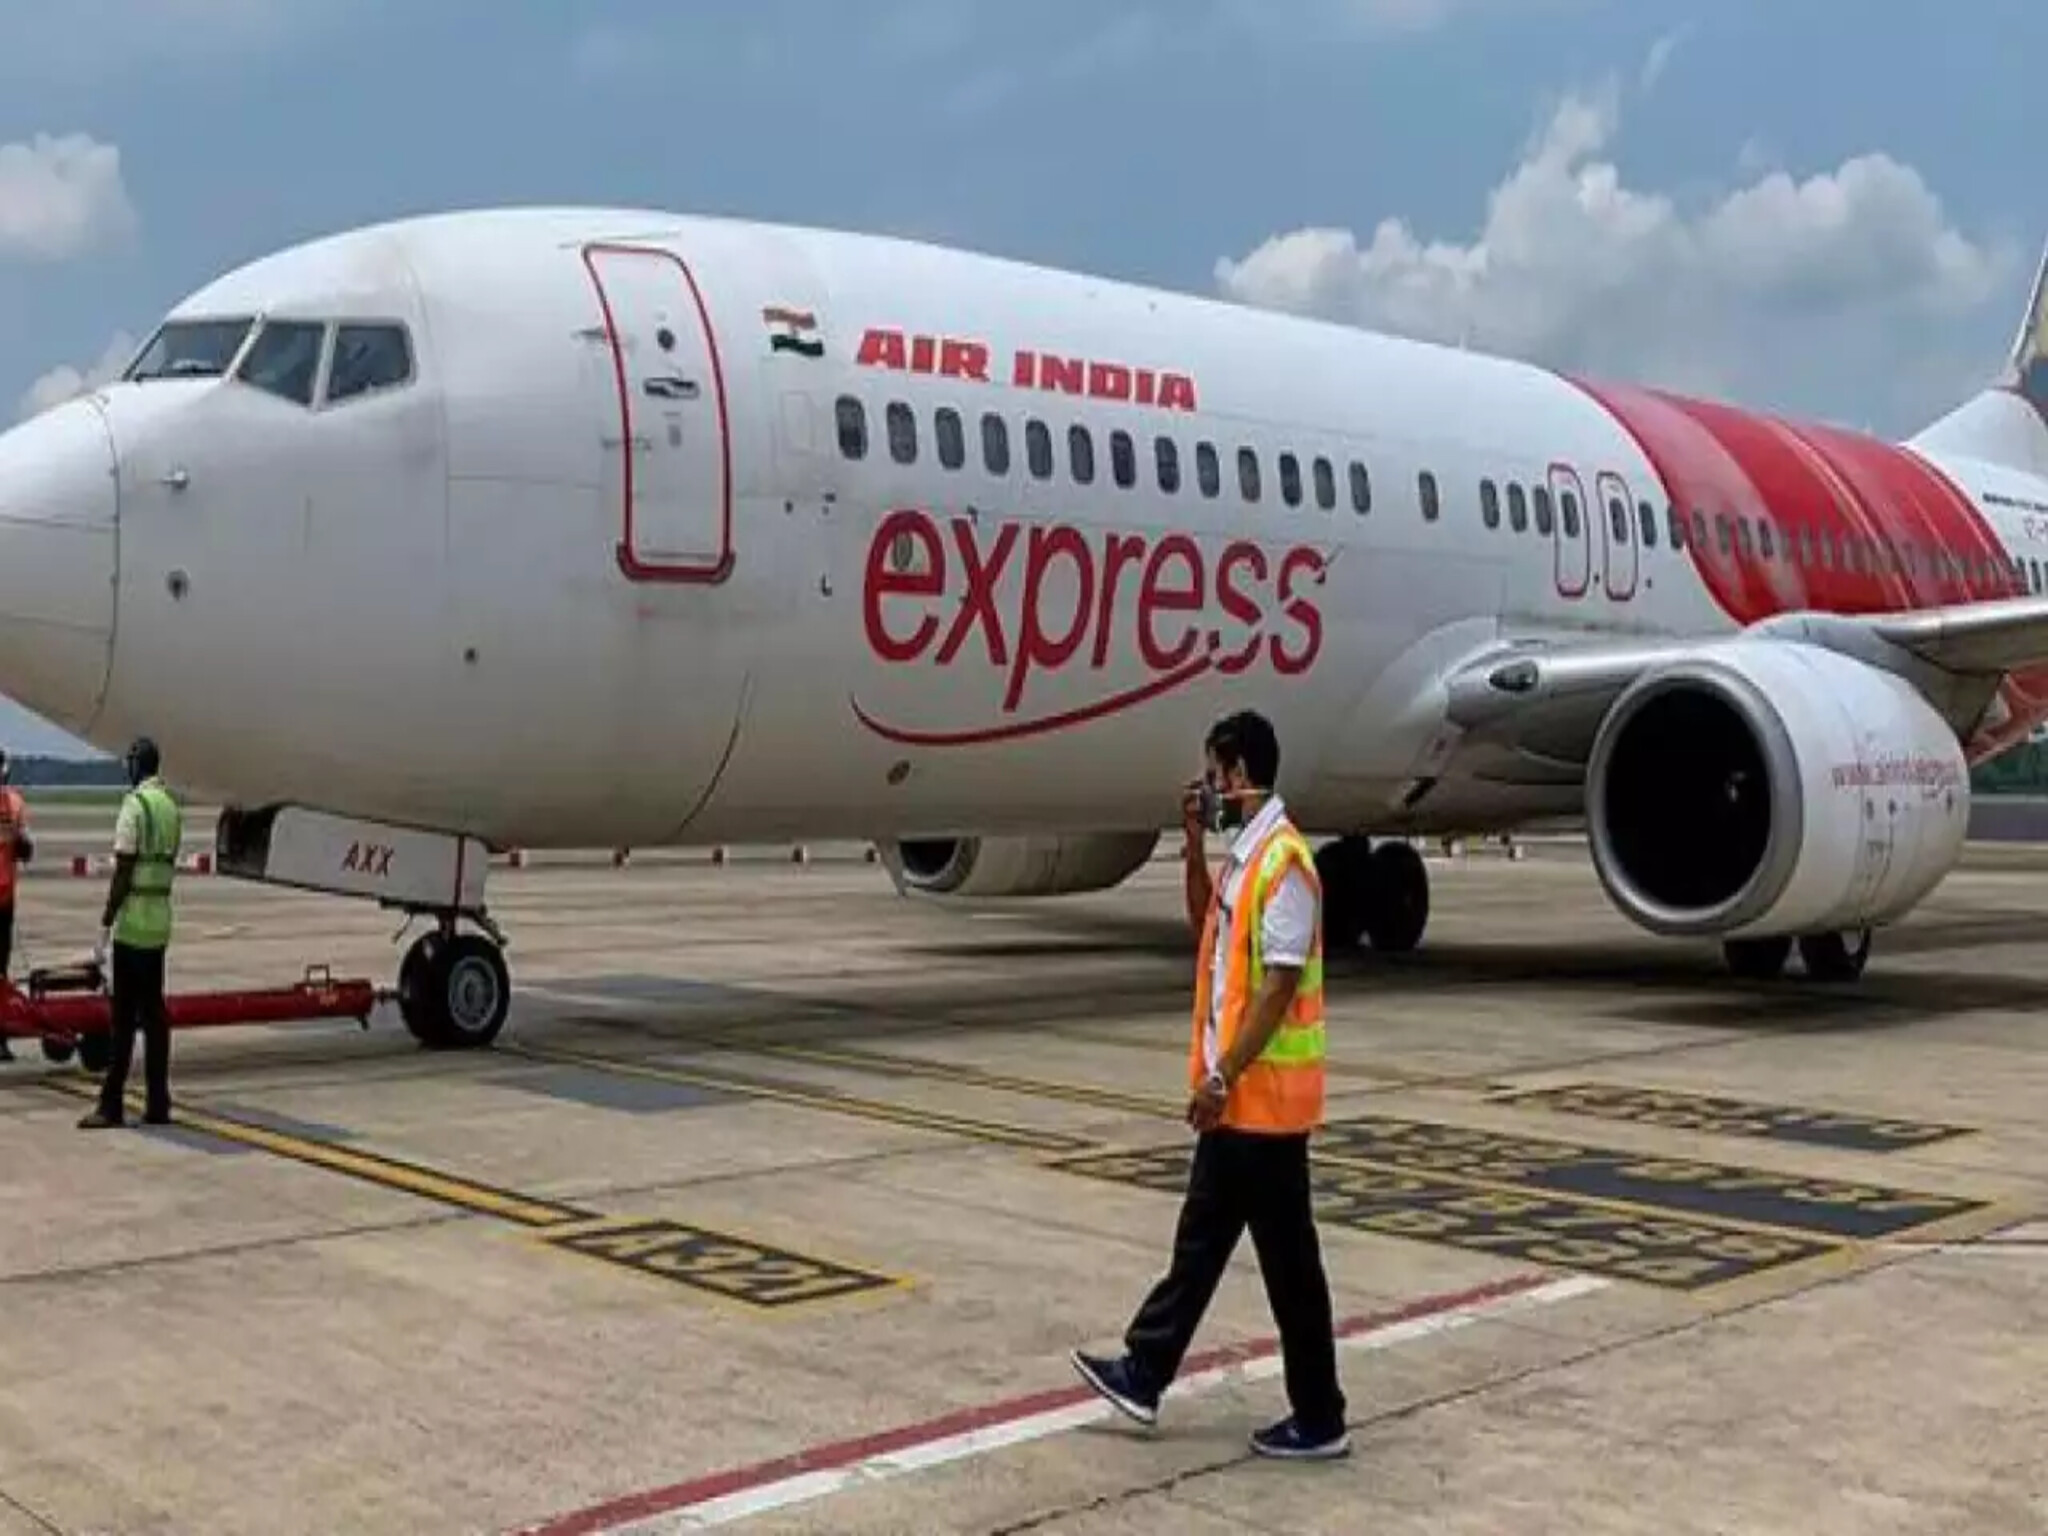 Dubai-India Flight Makes Emergency Landing in Karachi 